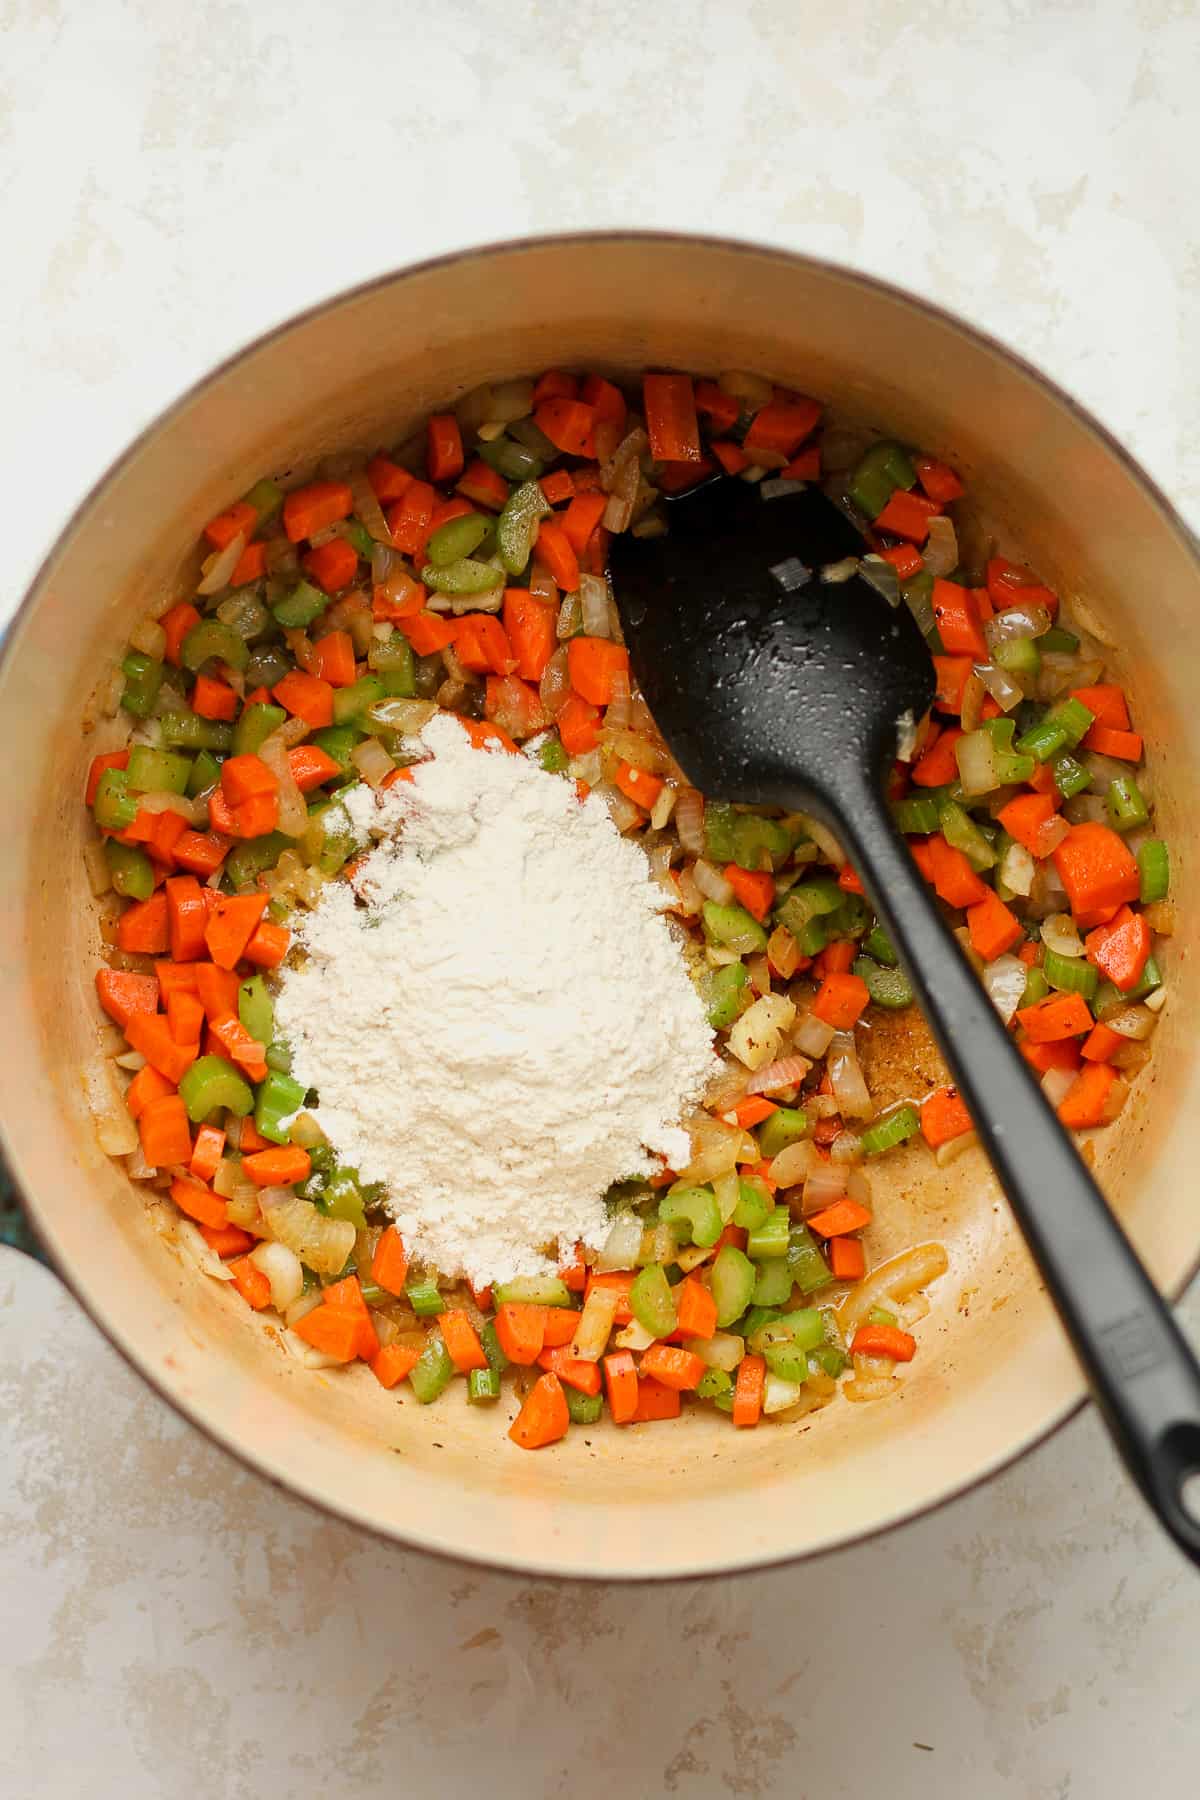 The pot of the sautéed veggies with flour on top.